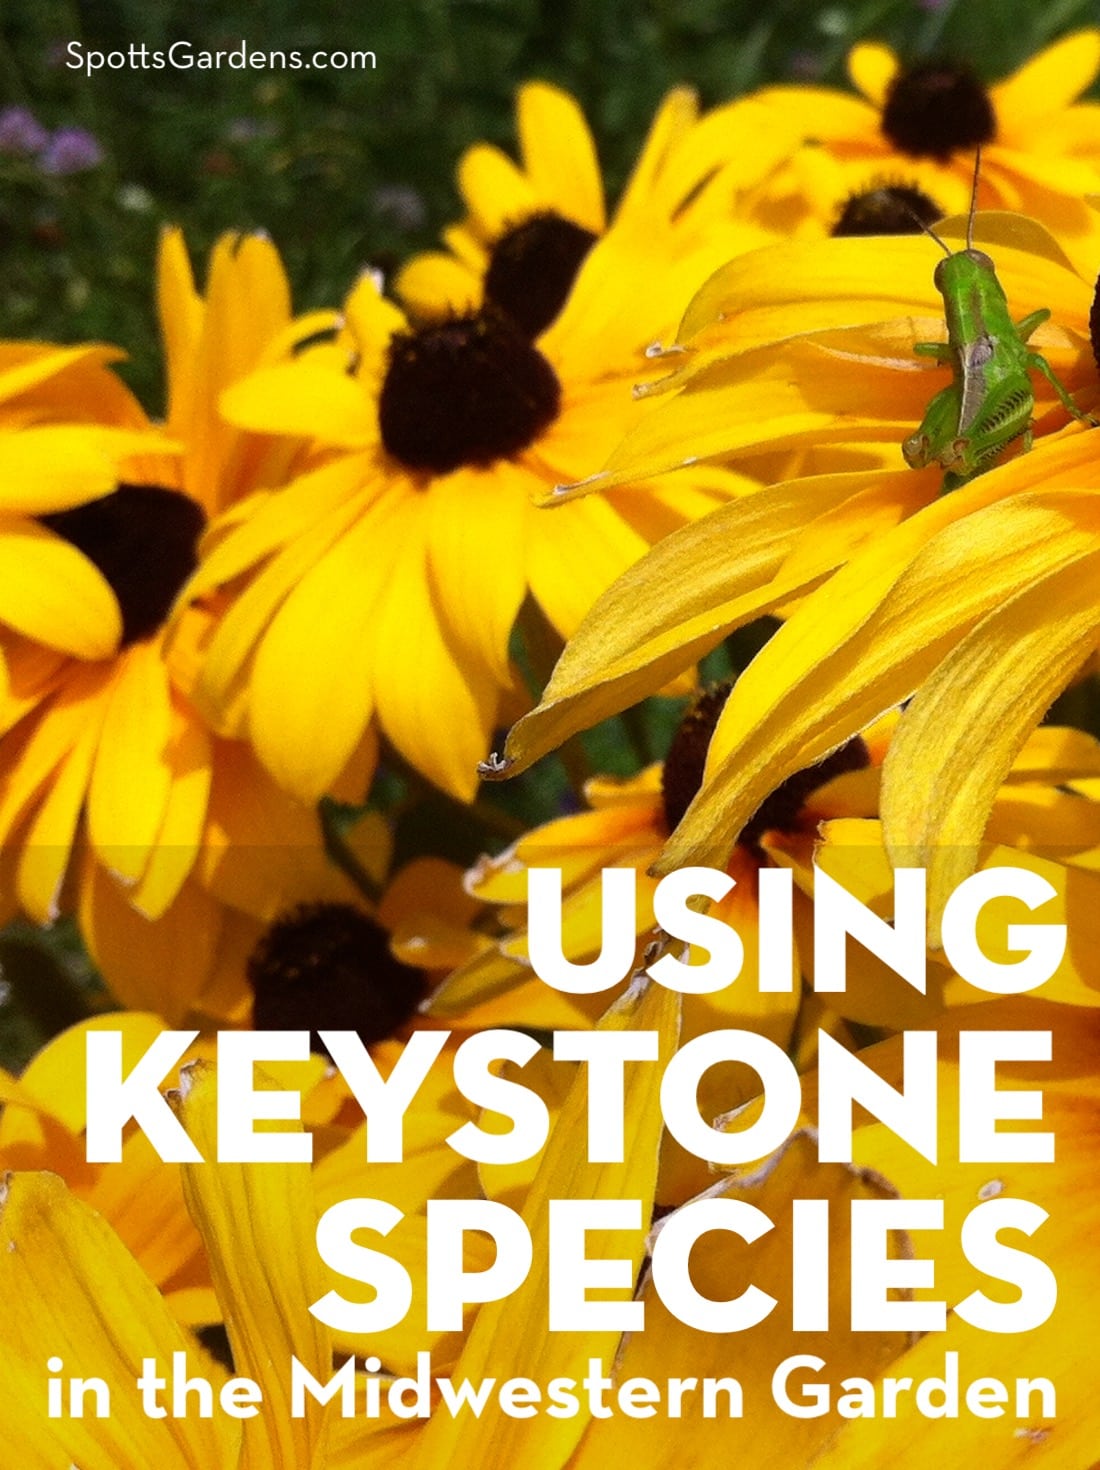 Keystone Species 101